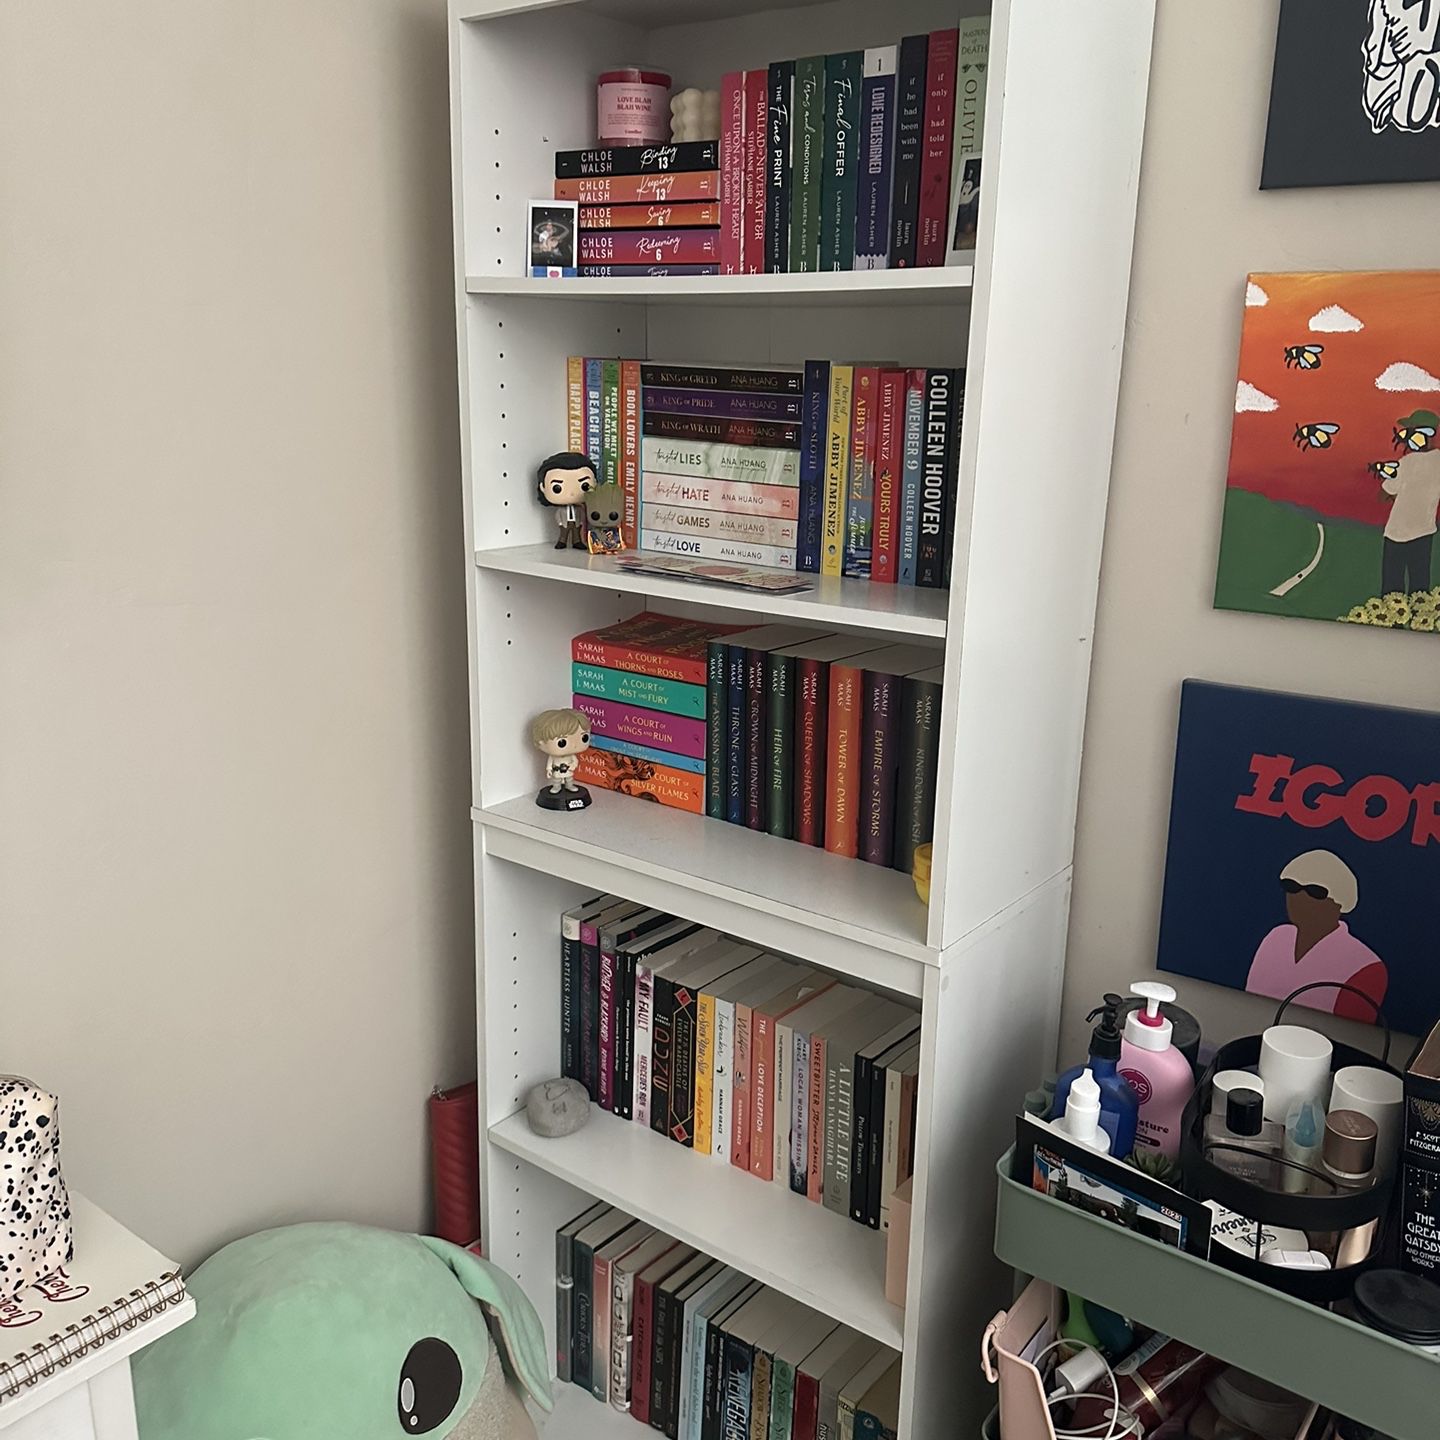 2 Target Five Shelf Bookcases